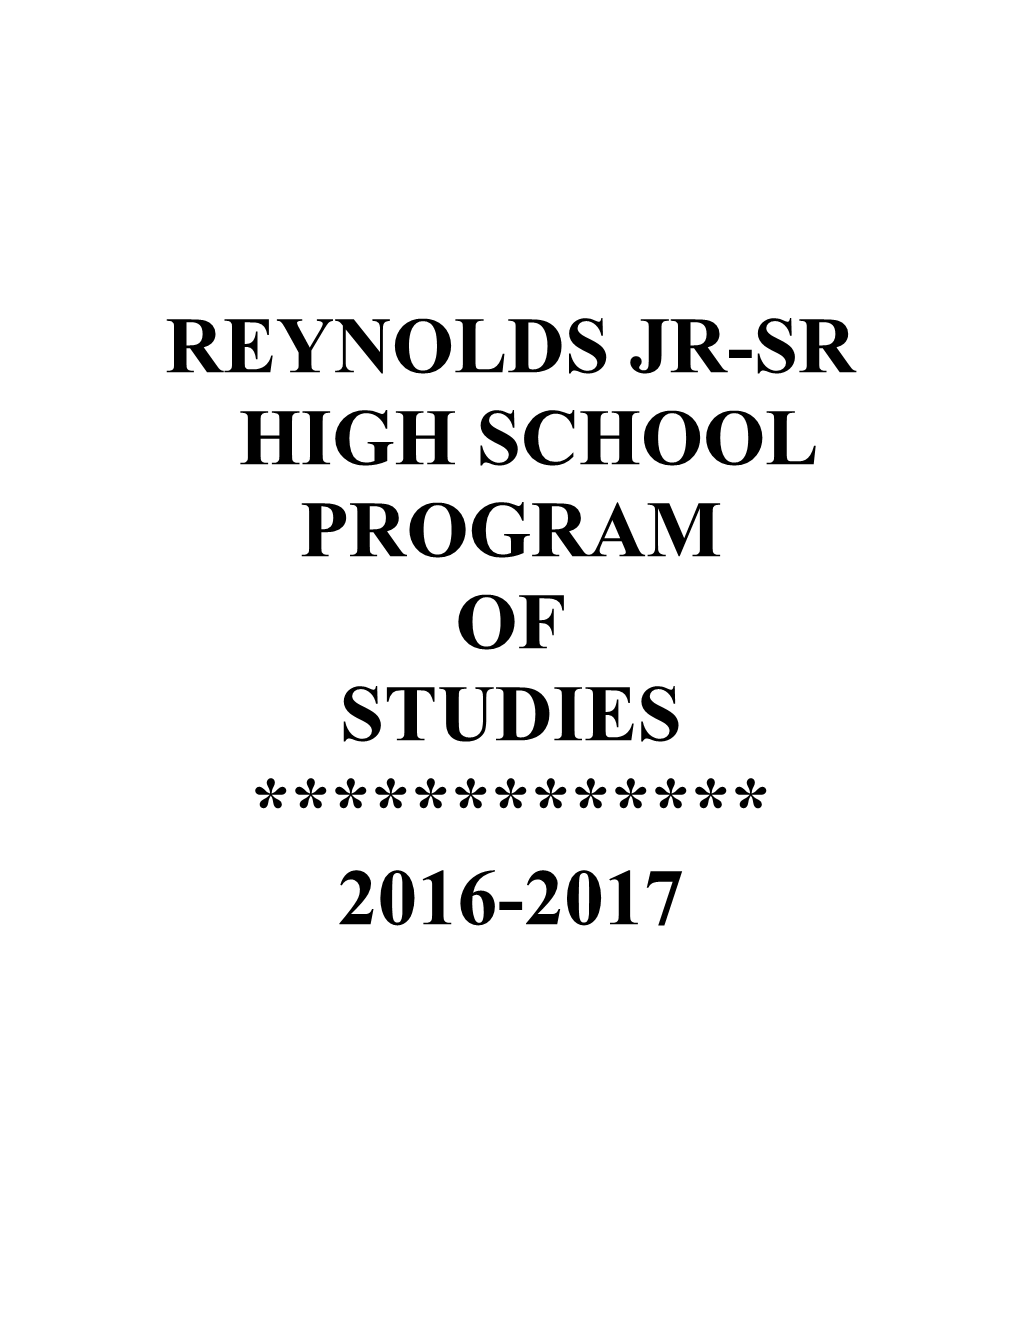 Reynolds Jr-Sr High School